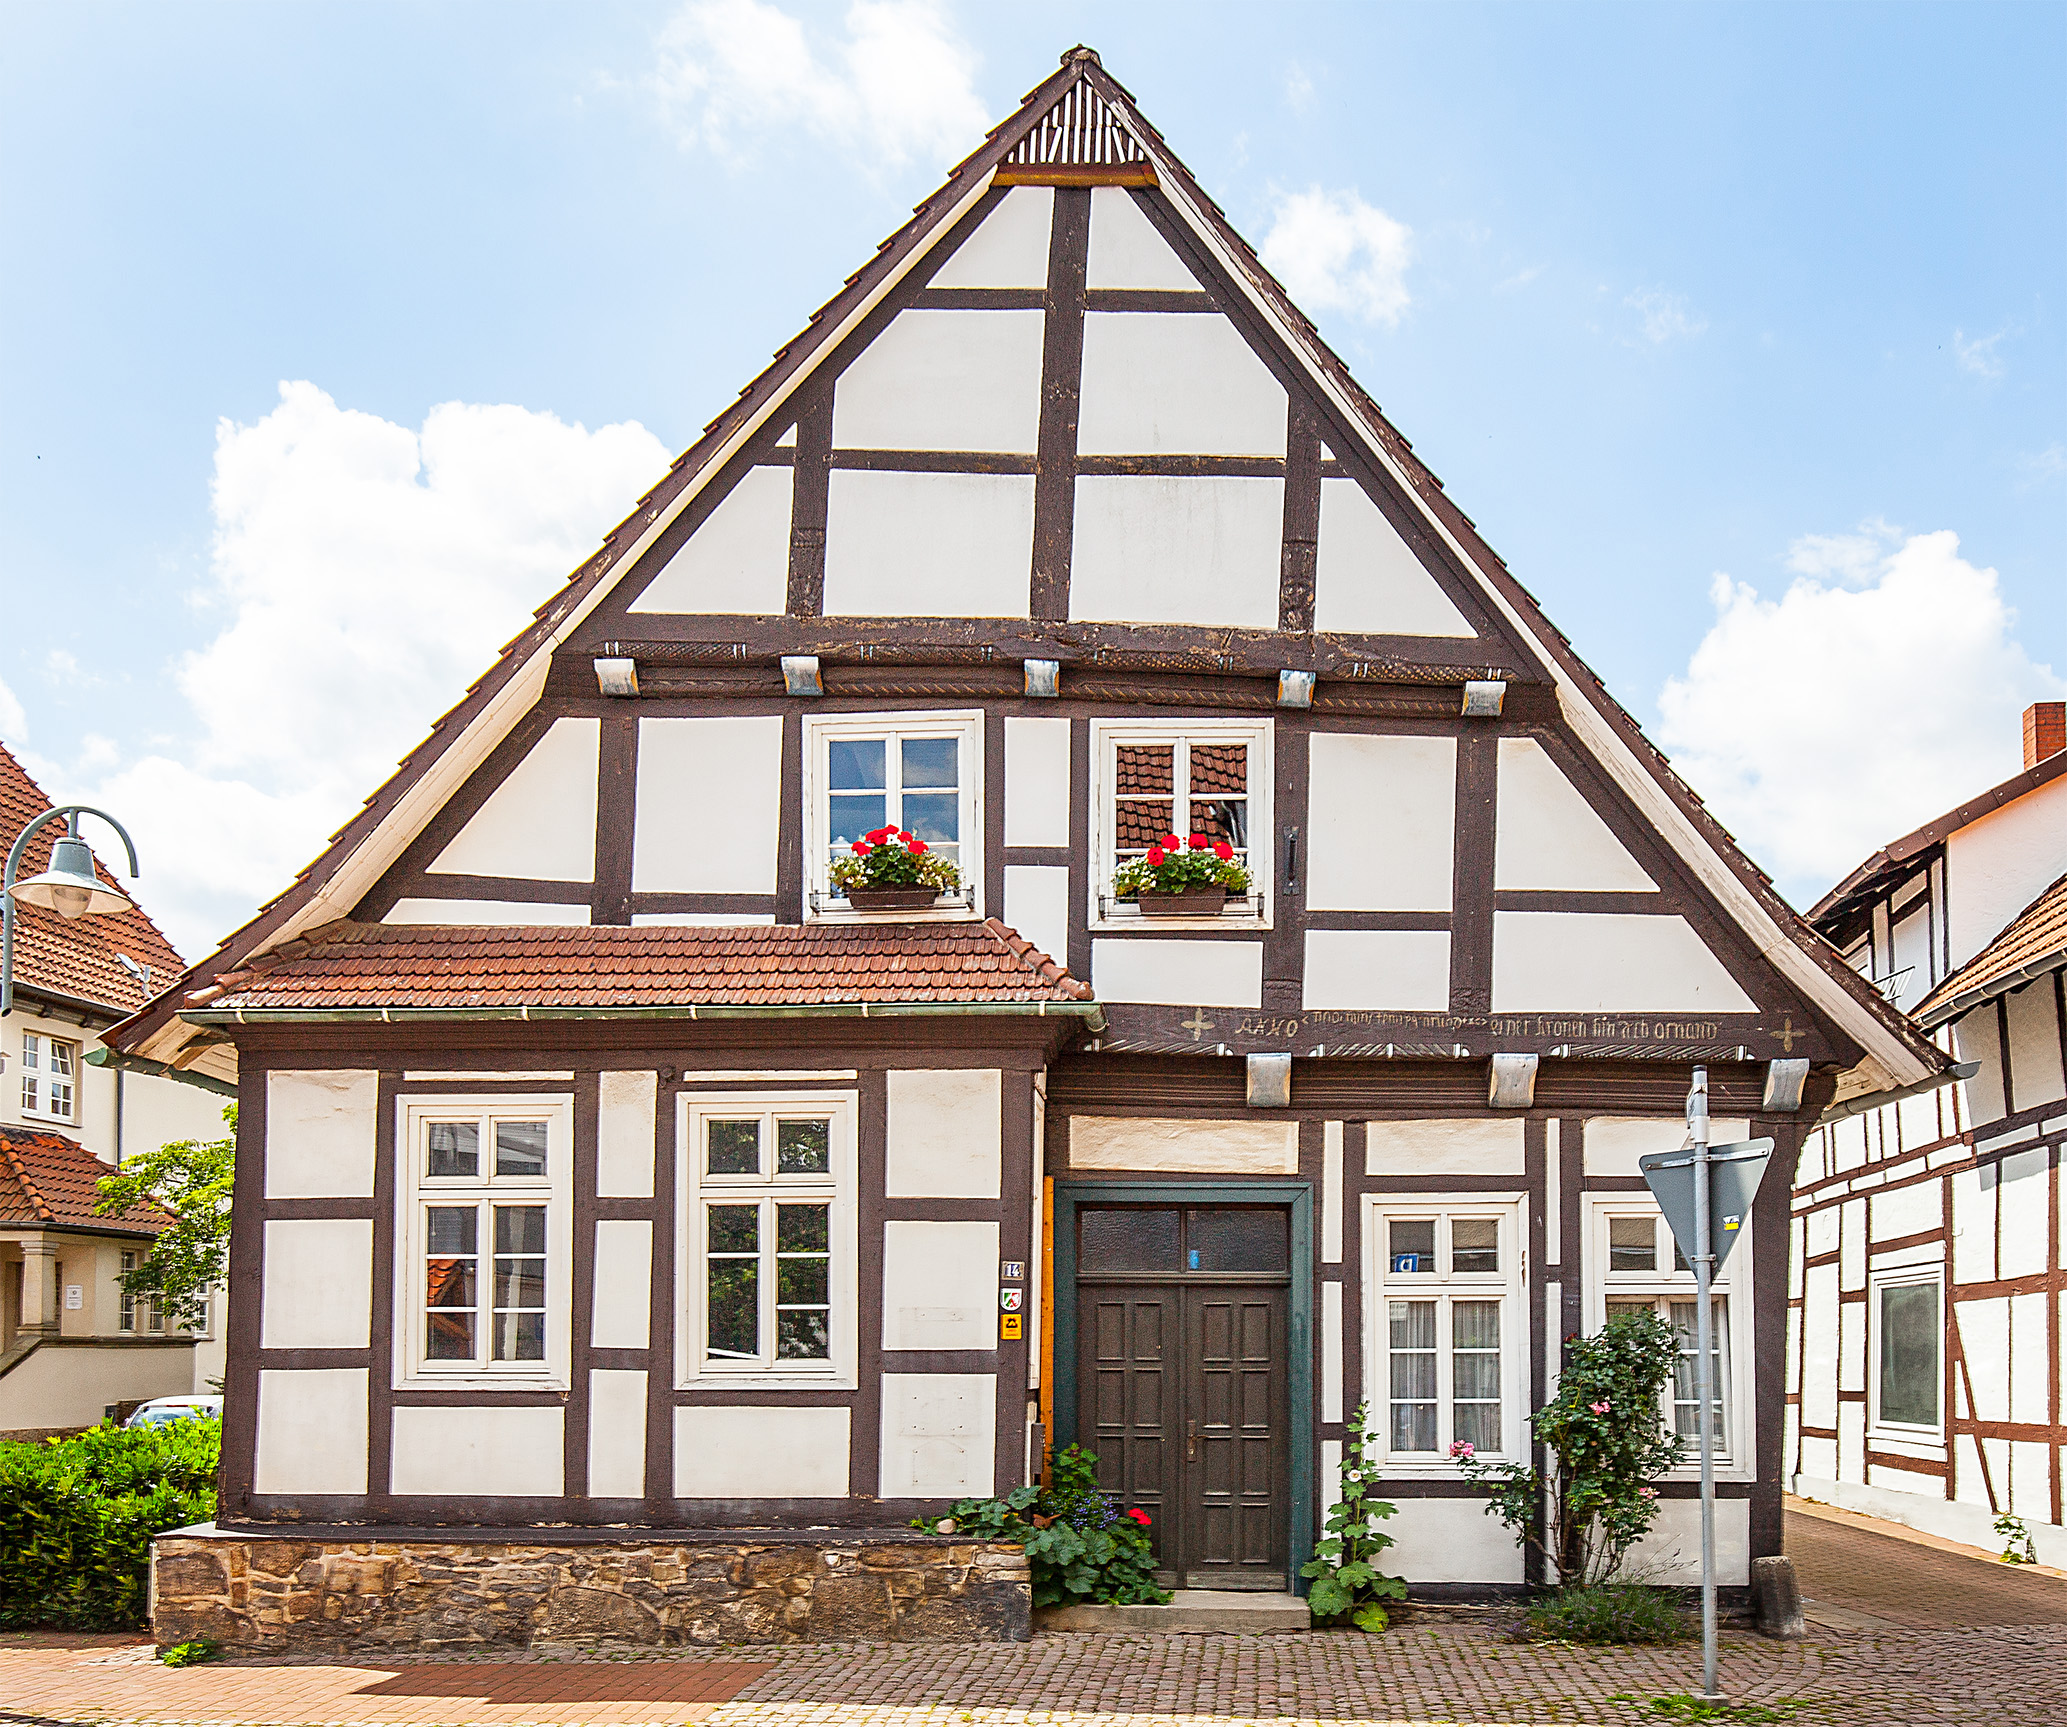 Дом под фахверк. Фахверк баварский стиль. Фахверковые постройки в Германии 15 век. Архитектура Германии фахверк. Стиль фахверк Бавария.